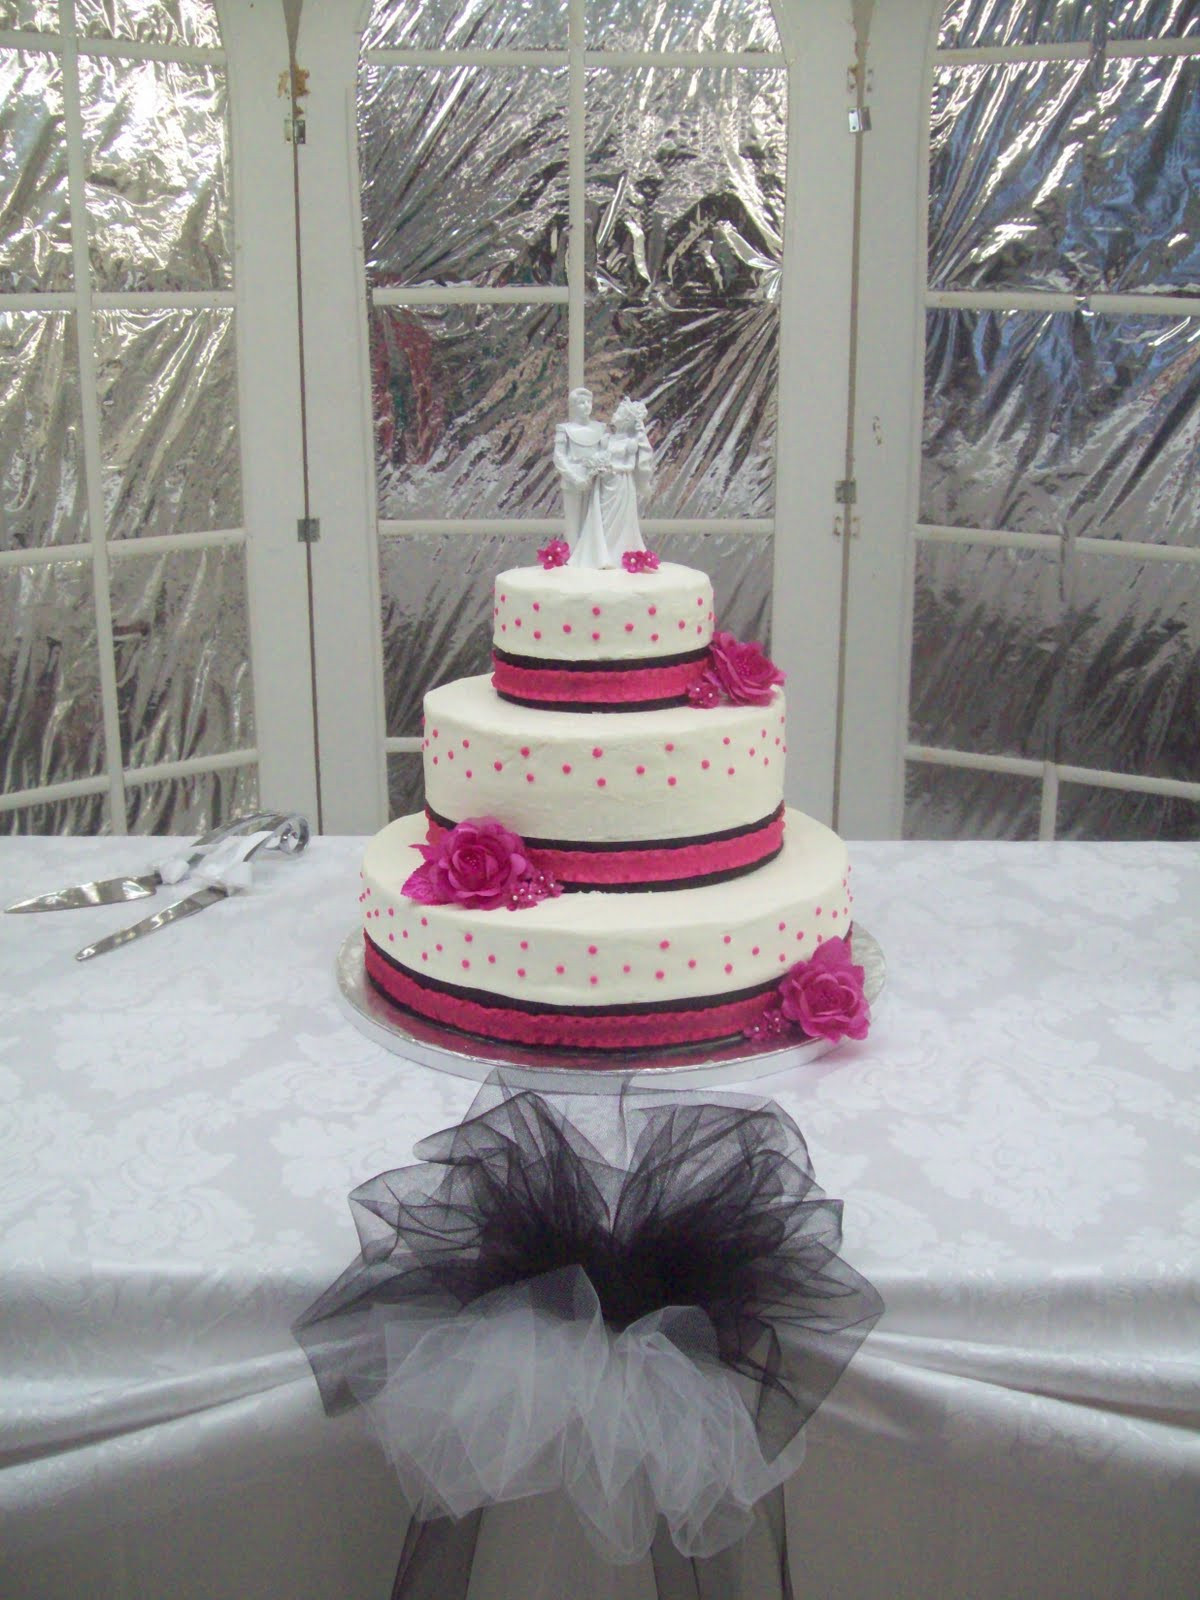 Hot Pink Wedding Cakes
 BB Cakes Hot pink and black wedding cake